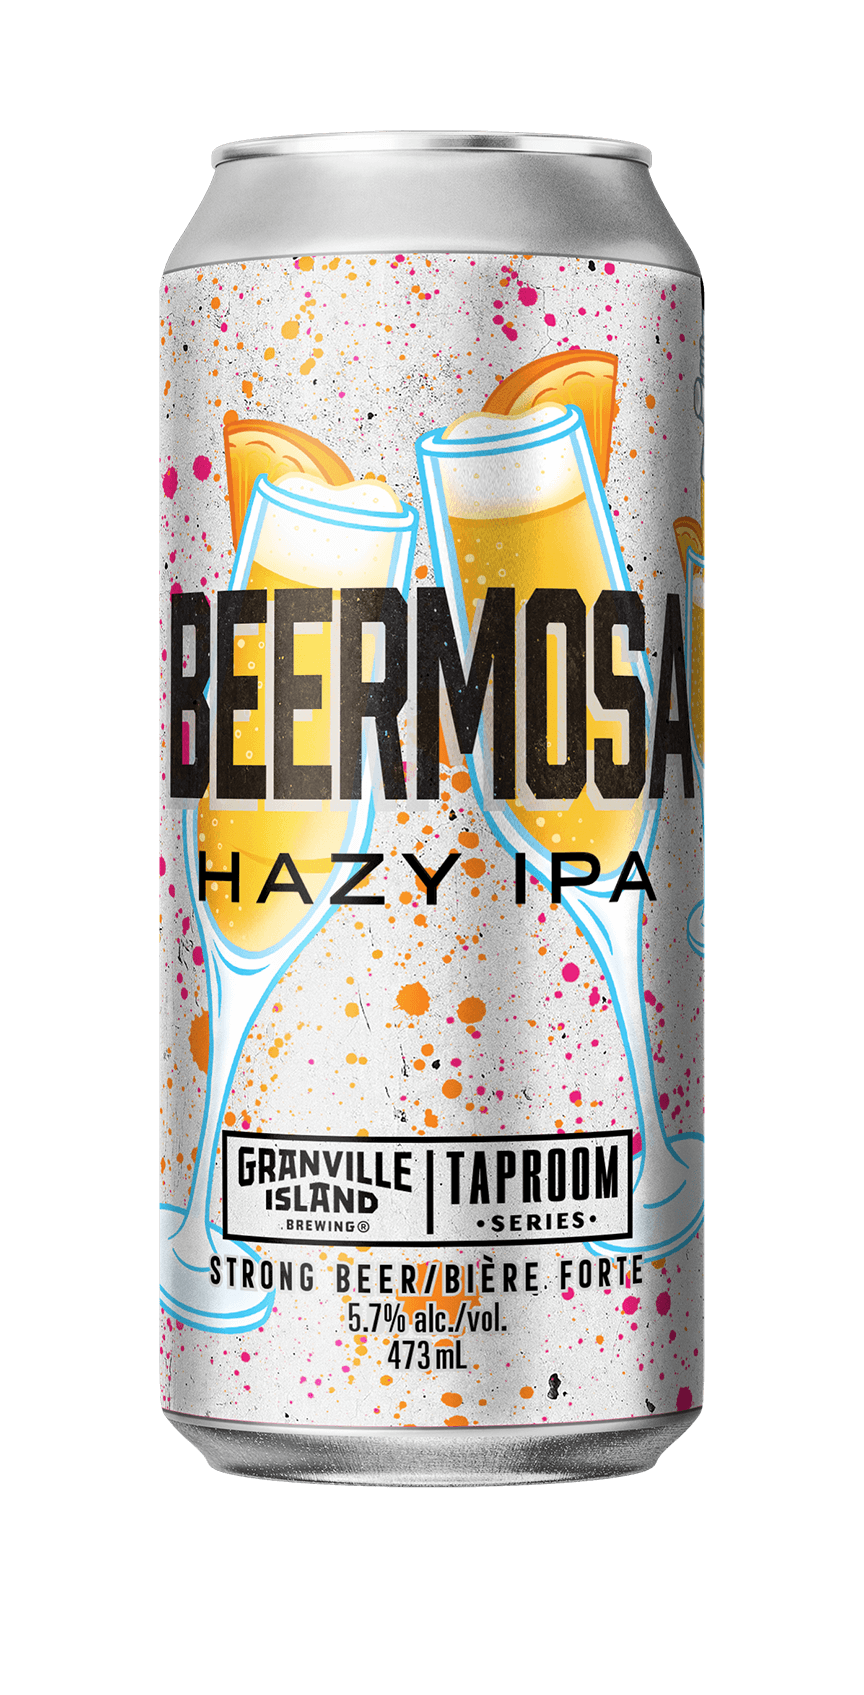 Beermosa Hazy IPA